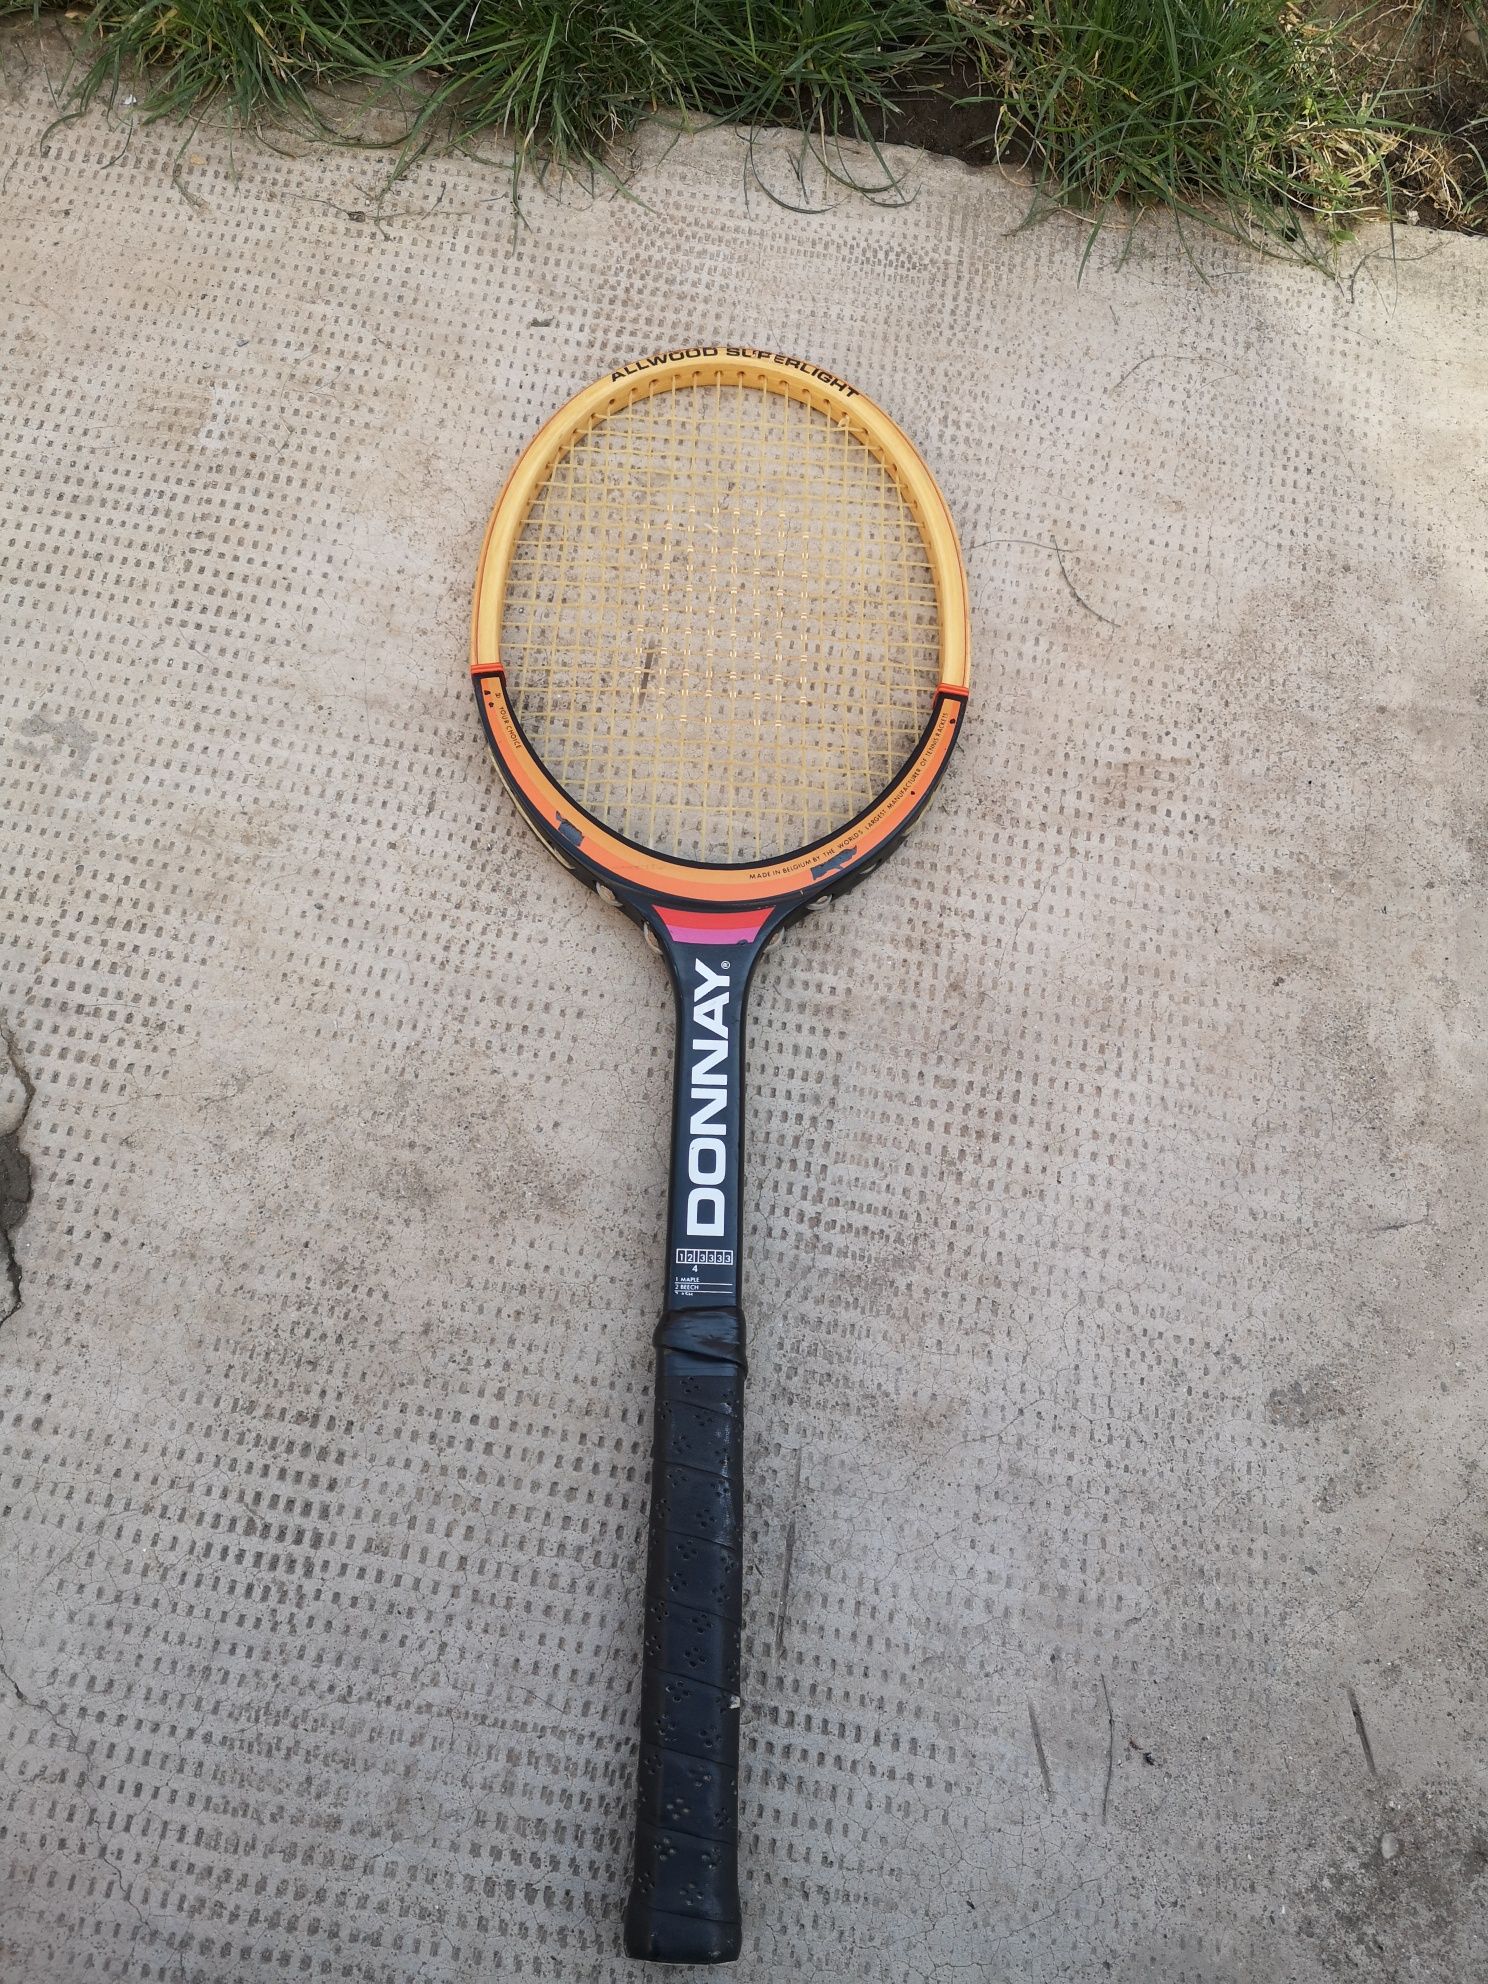 Racheta de tennis de colecție Donnay